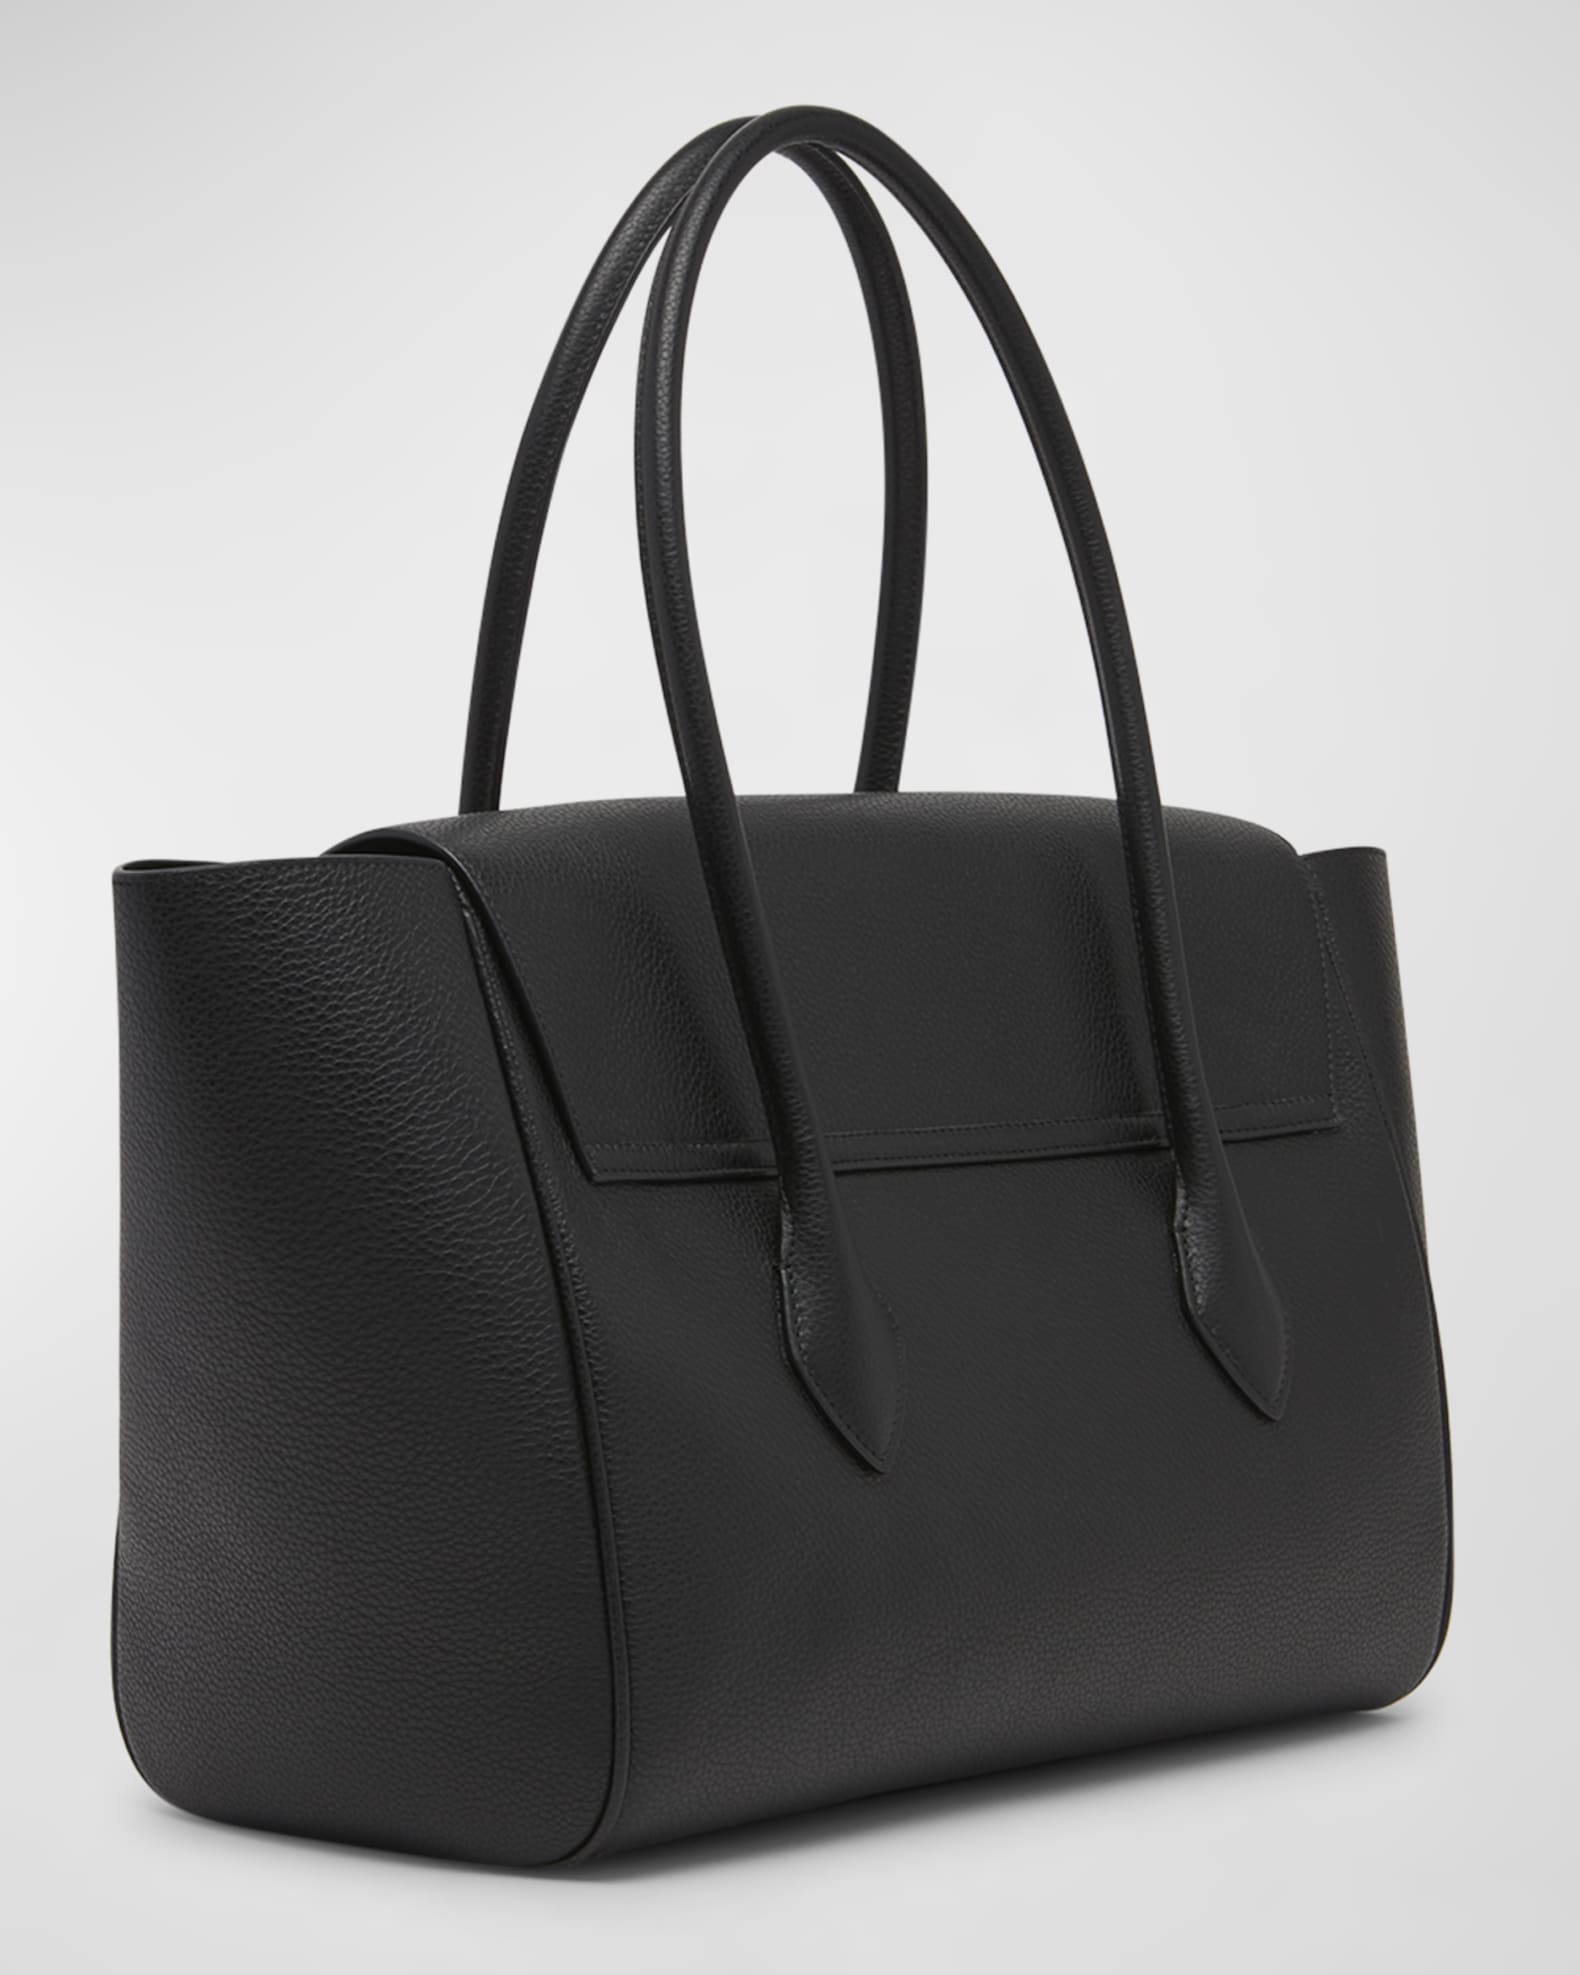 Vintage Christian Dior grained black leather handbag with oval